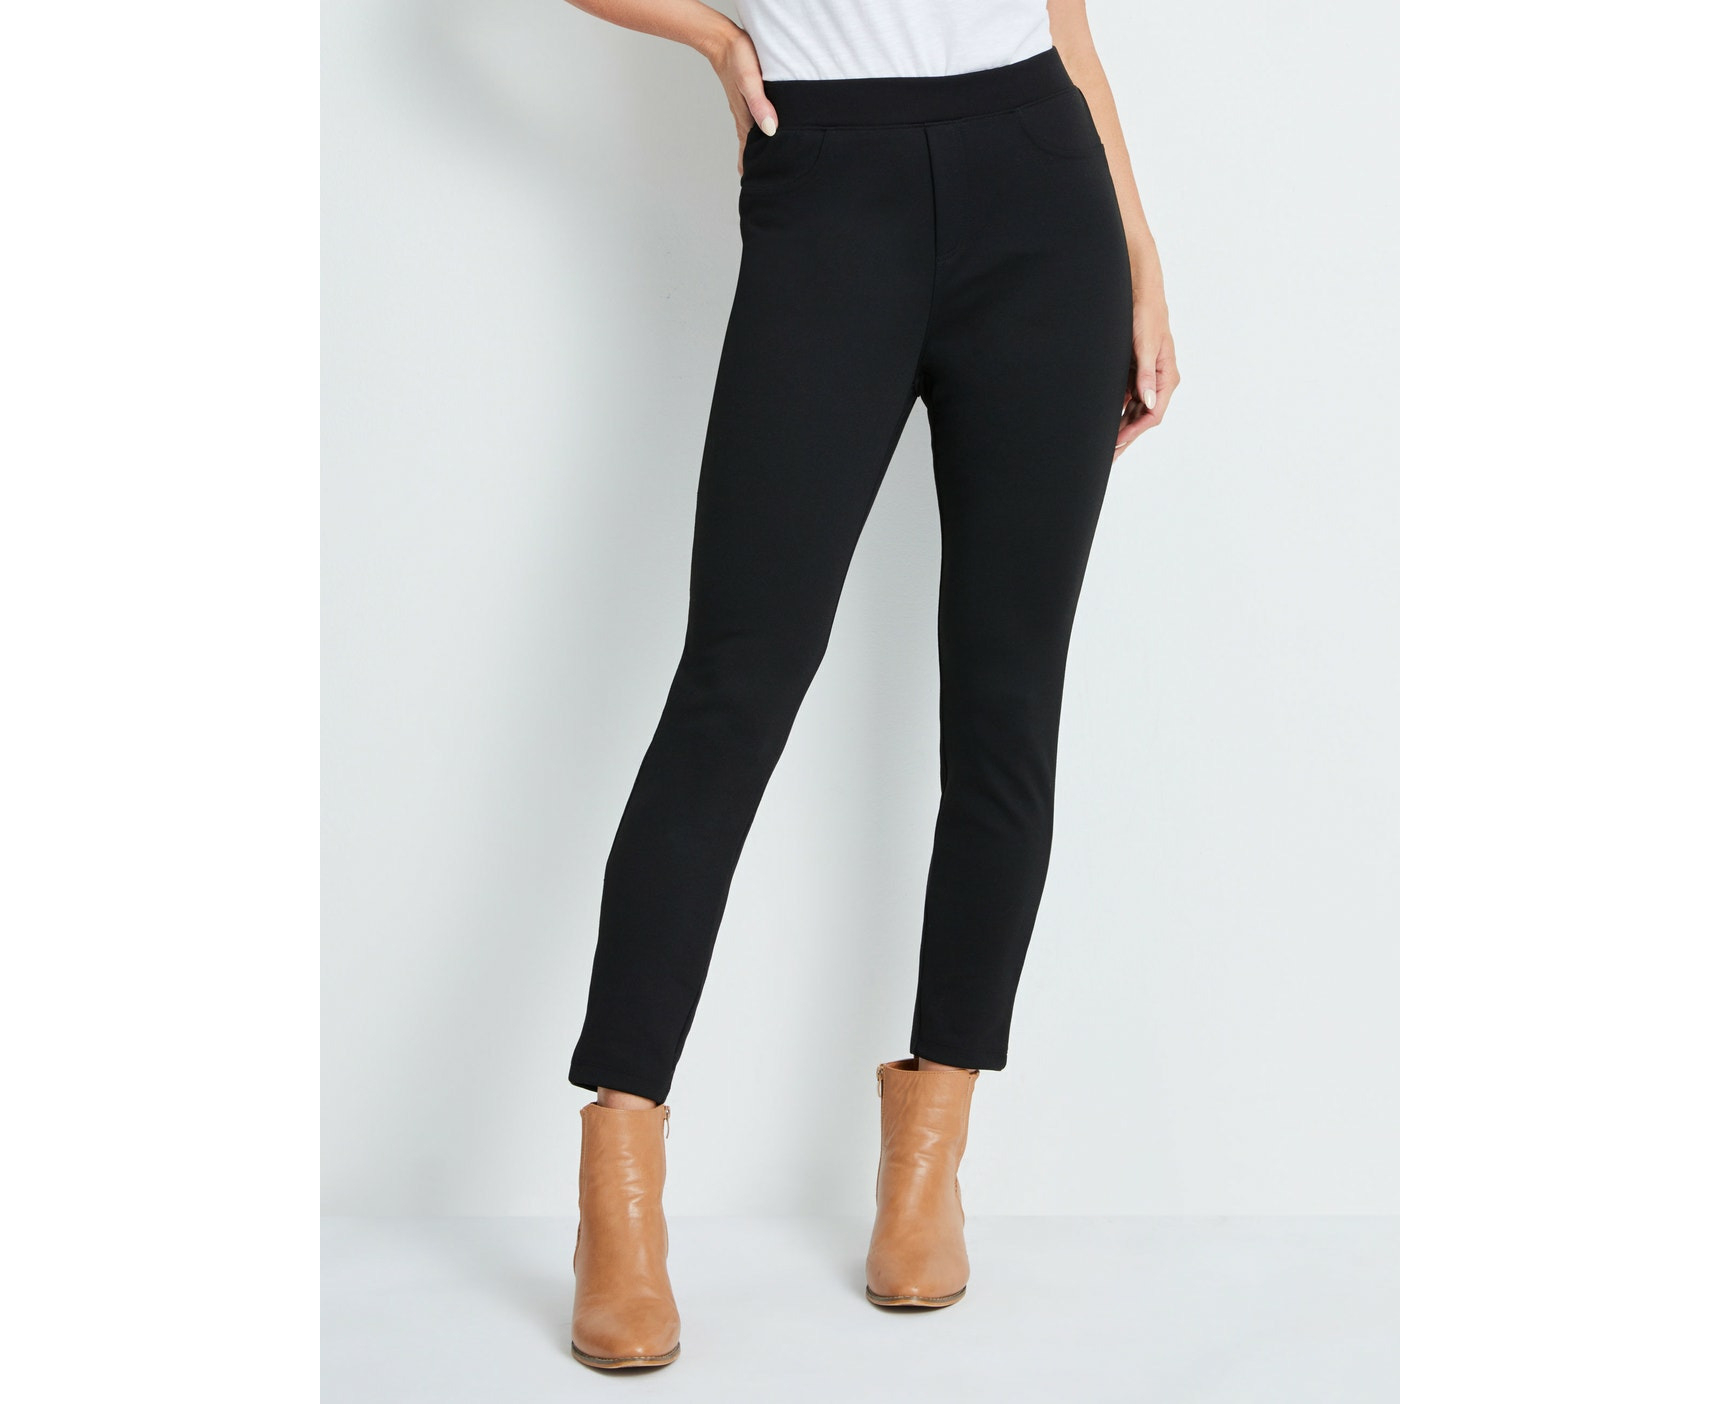 RIVERS - Womens Pants - Black Winter Ponte Leggings Elastane - Fashion  Trousers - High Waist - Side Elastic - Casual Work Clothes - Office Wear -  Black